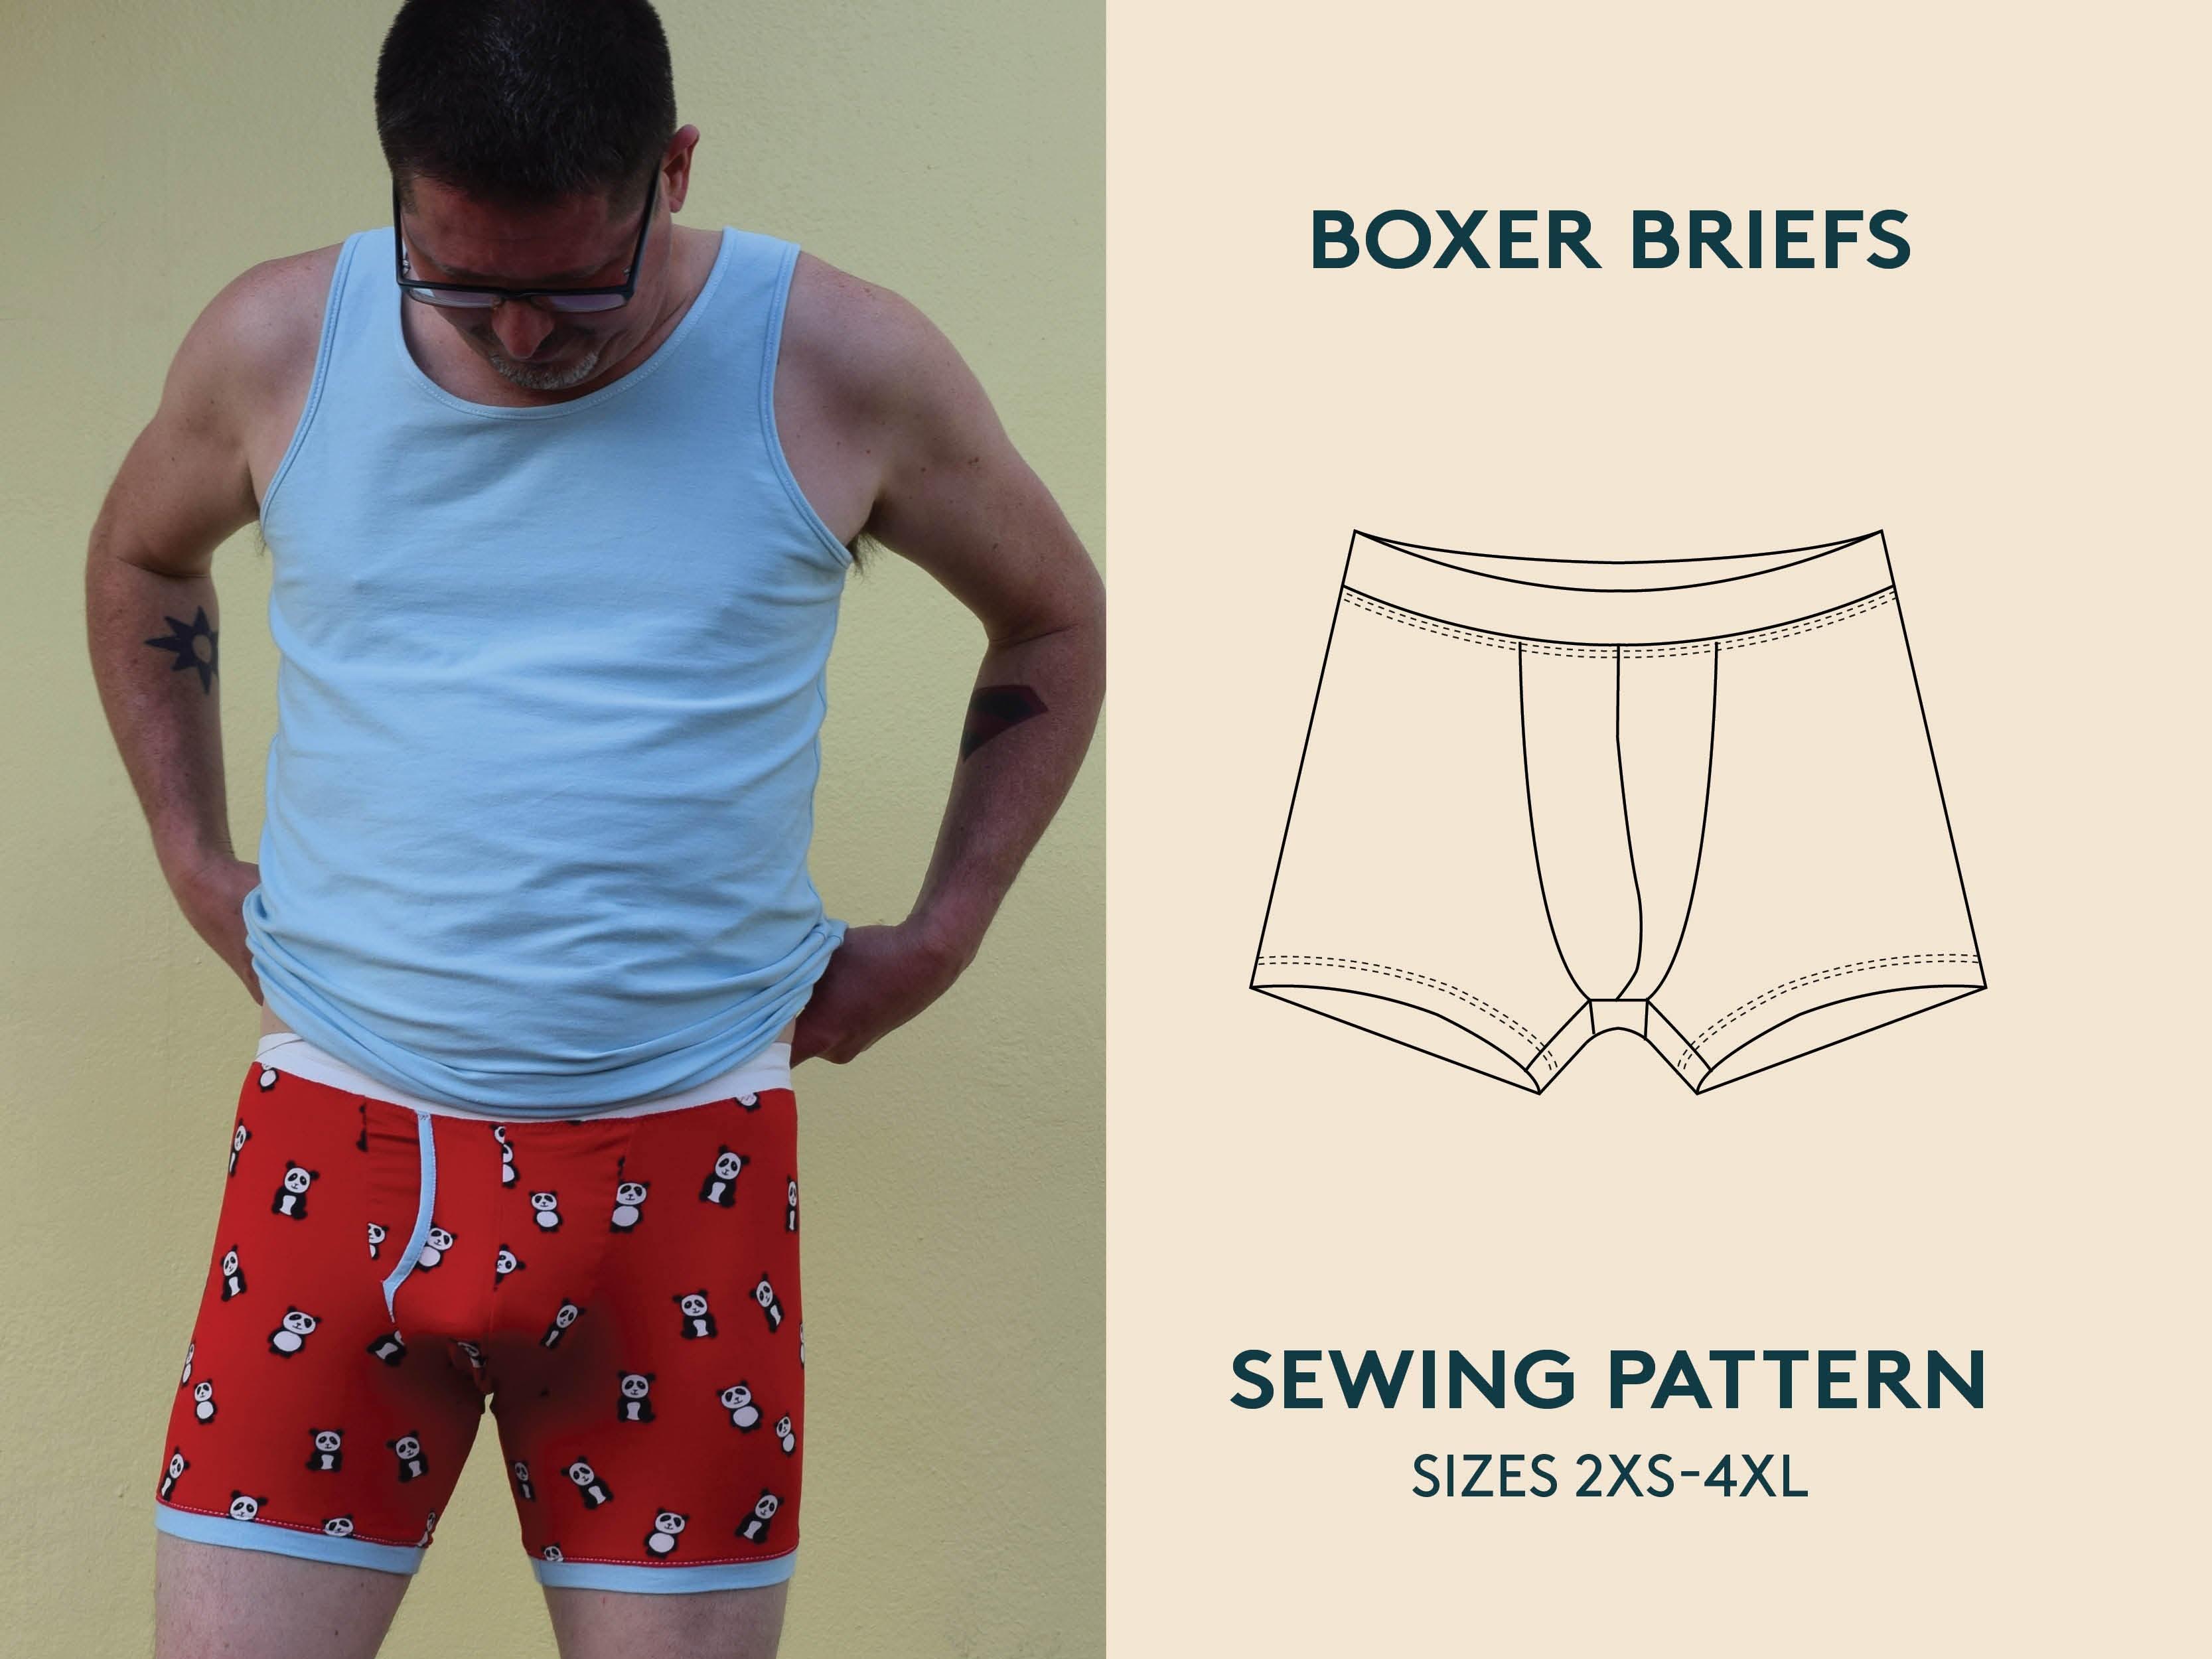 Men’s Boxer Briefs sewing pattern